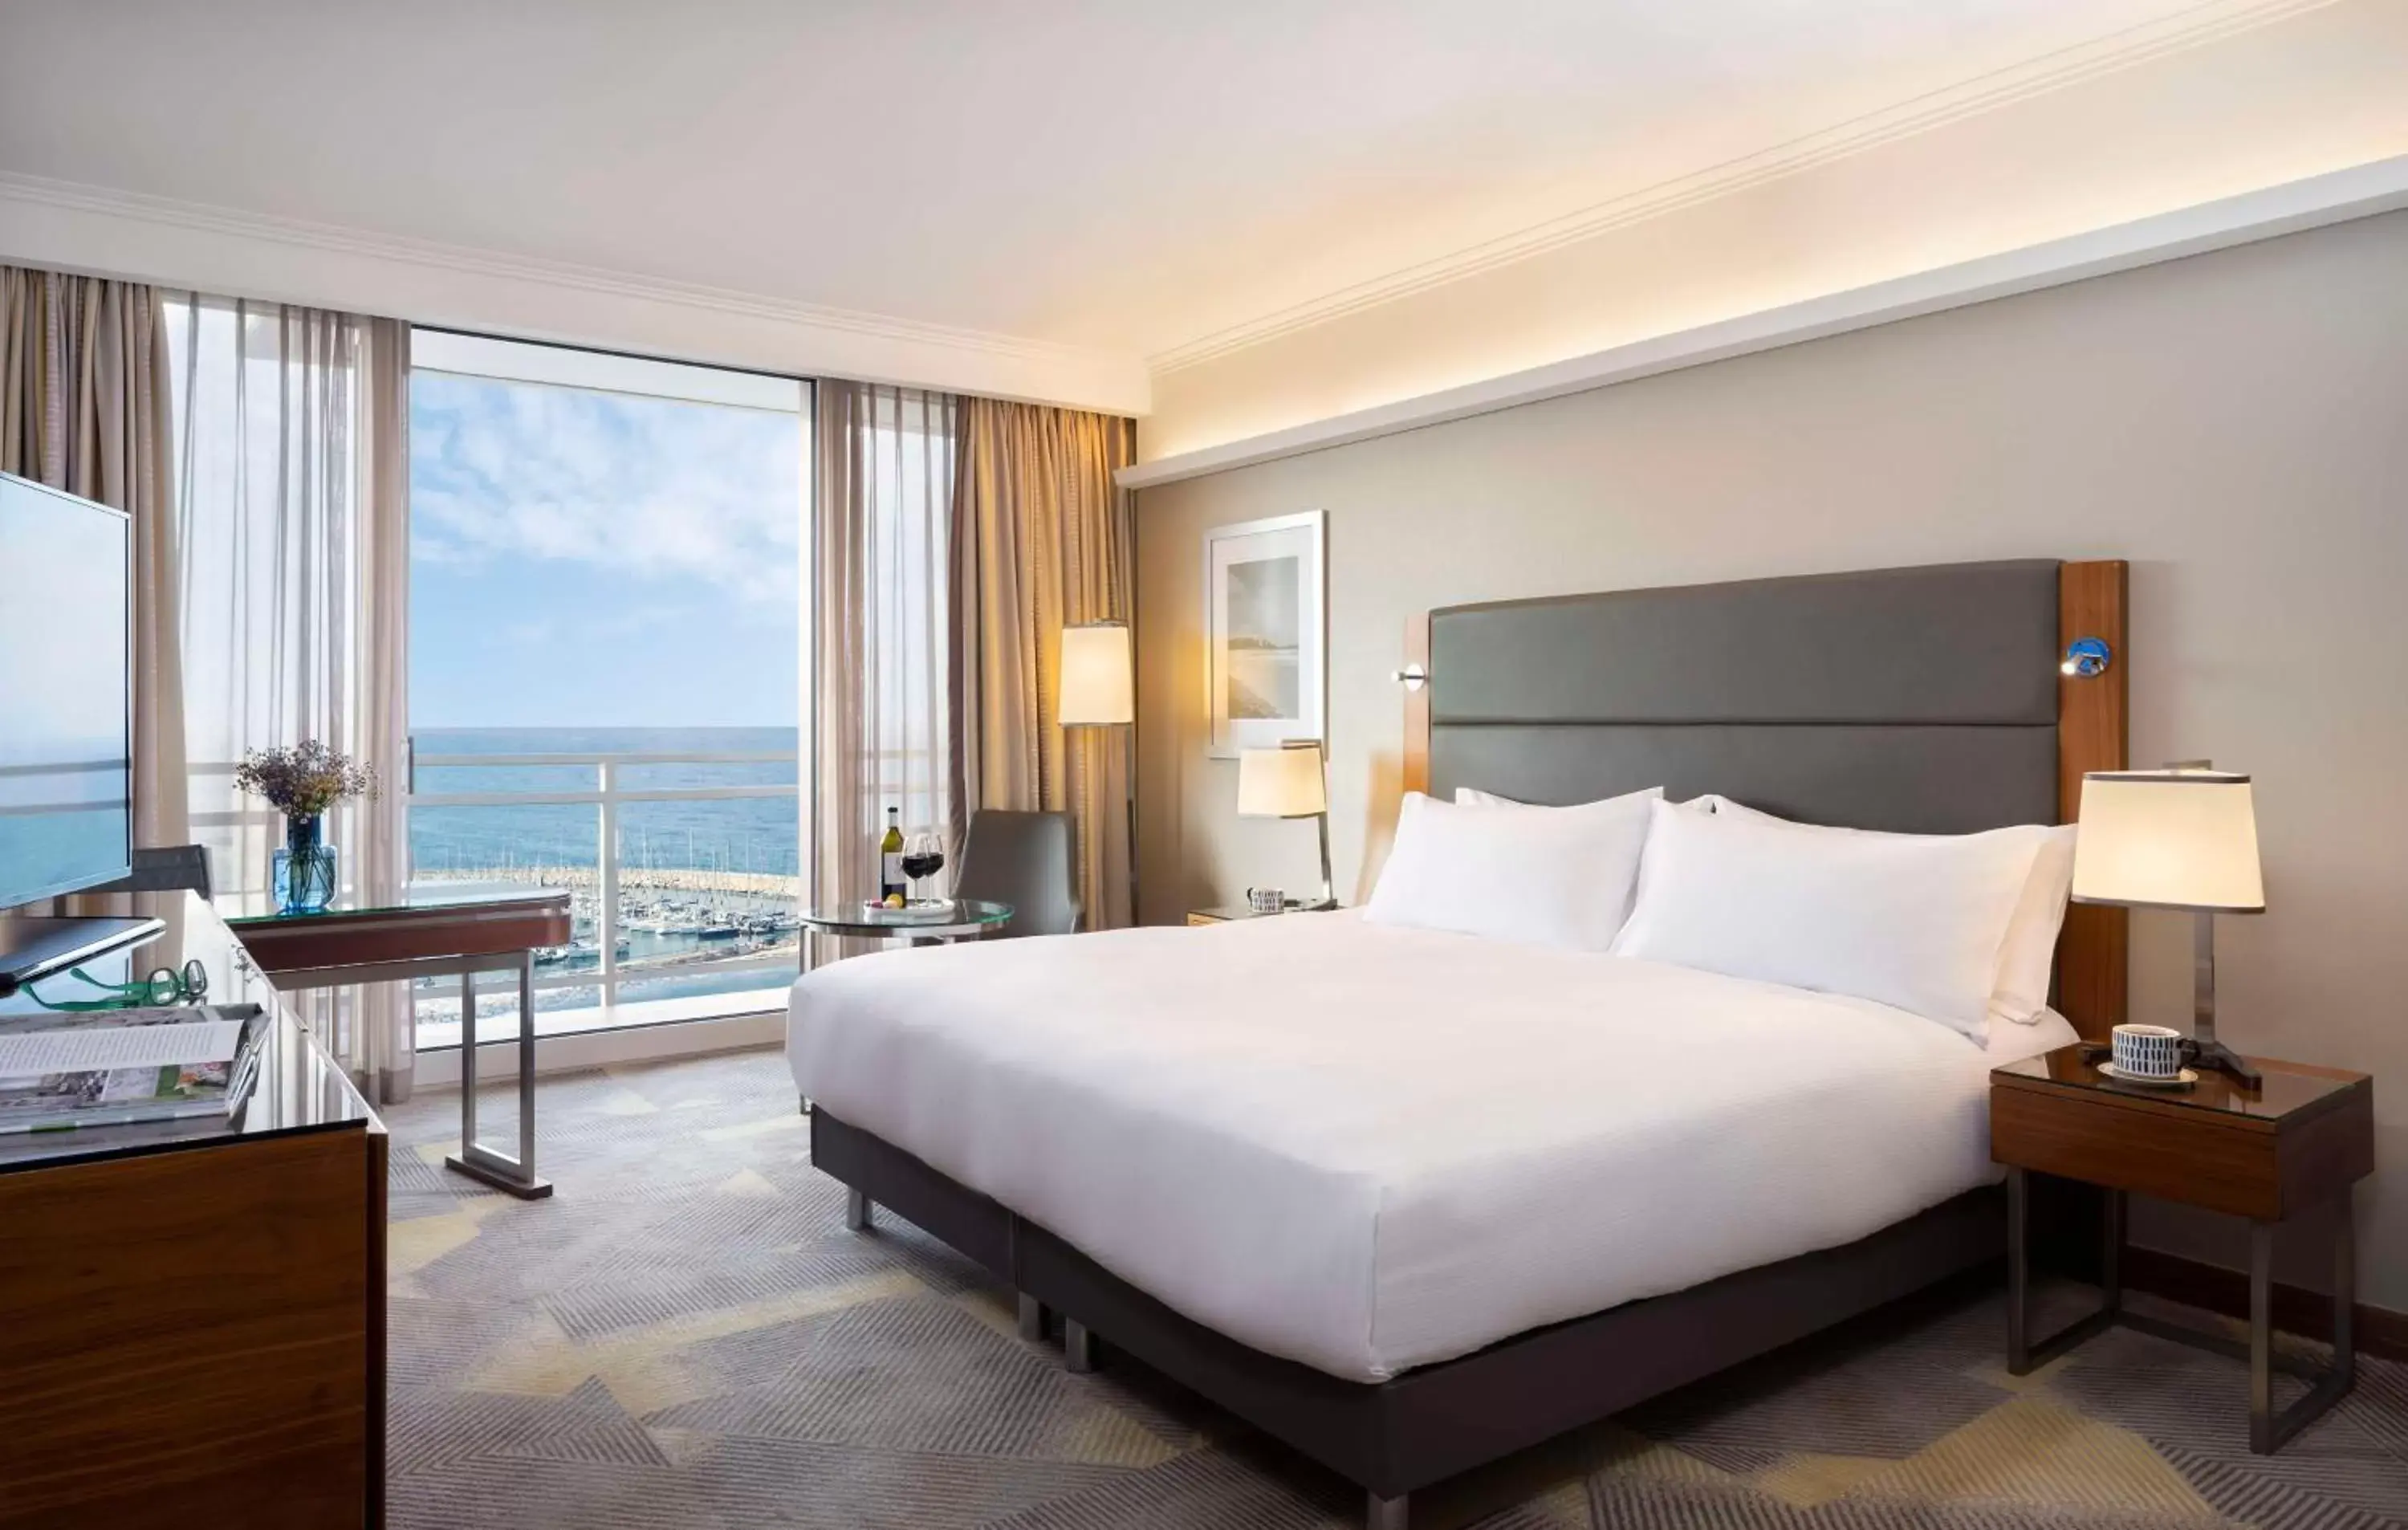 King Premium Deluxe Room with Sea View in Hilton Tel Aviv Hotel